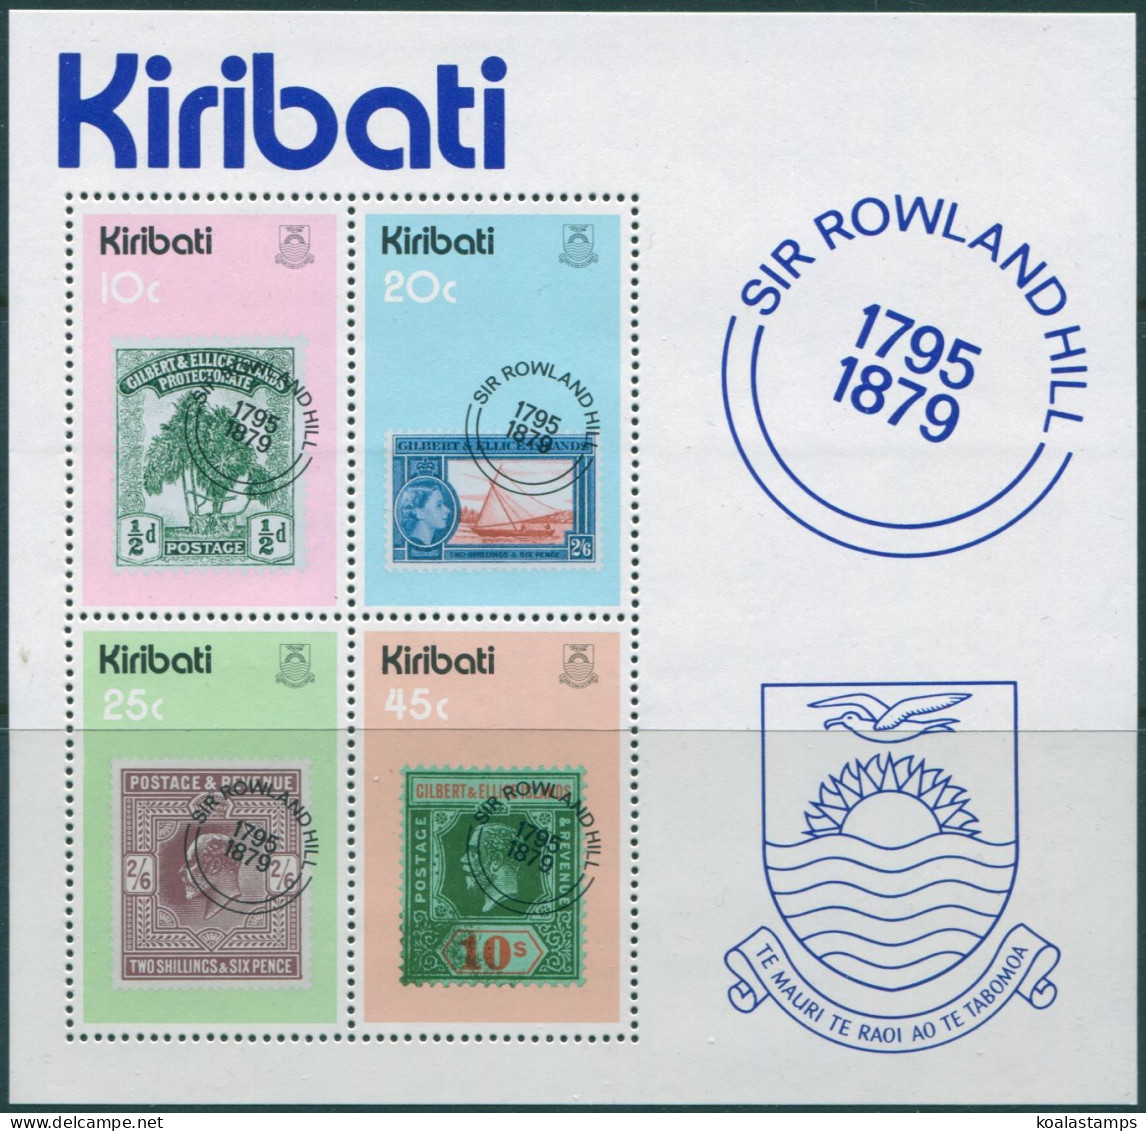 Kiribati 1979 SG104 Sir Rowland Hill MS MNH - Kiribati (1979-...)